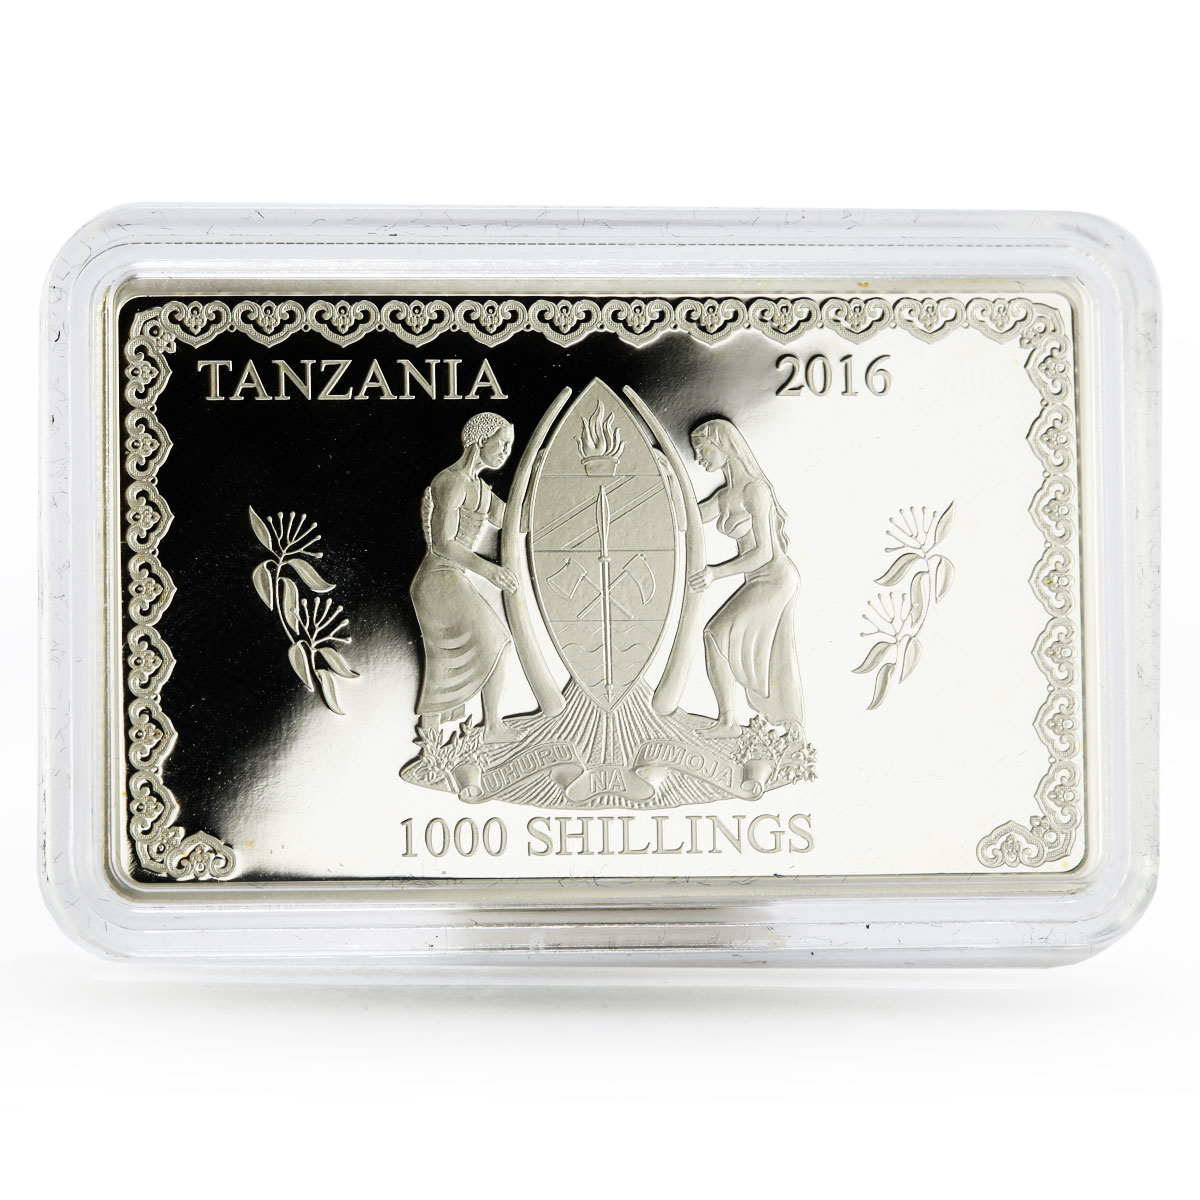 Tanzania 1000 shillings Year of the Monkey series Wisdom Monkey silver coin 2016